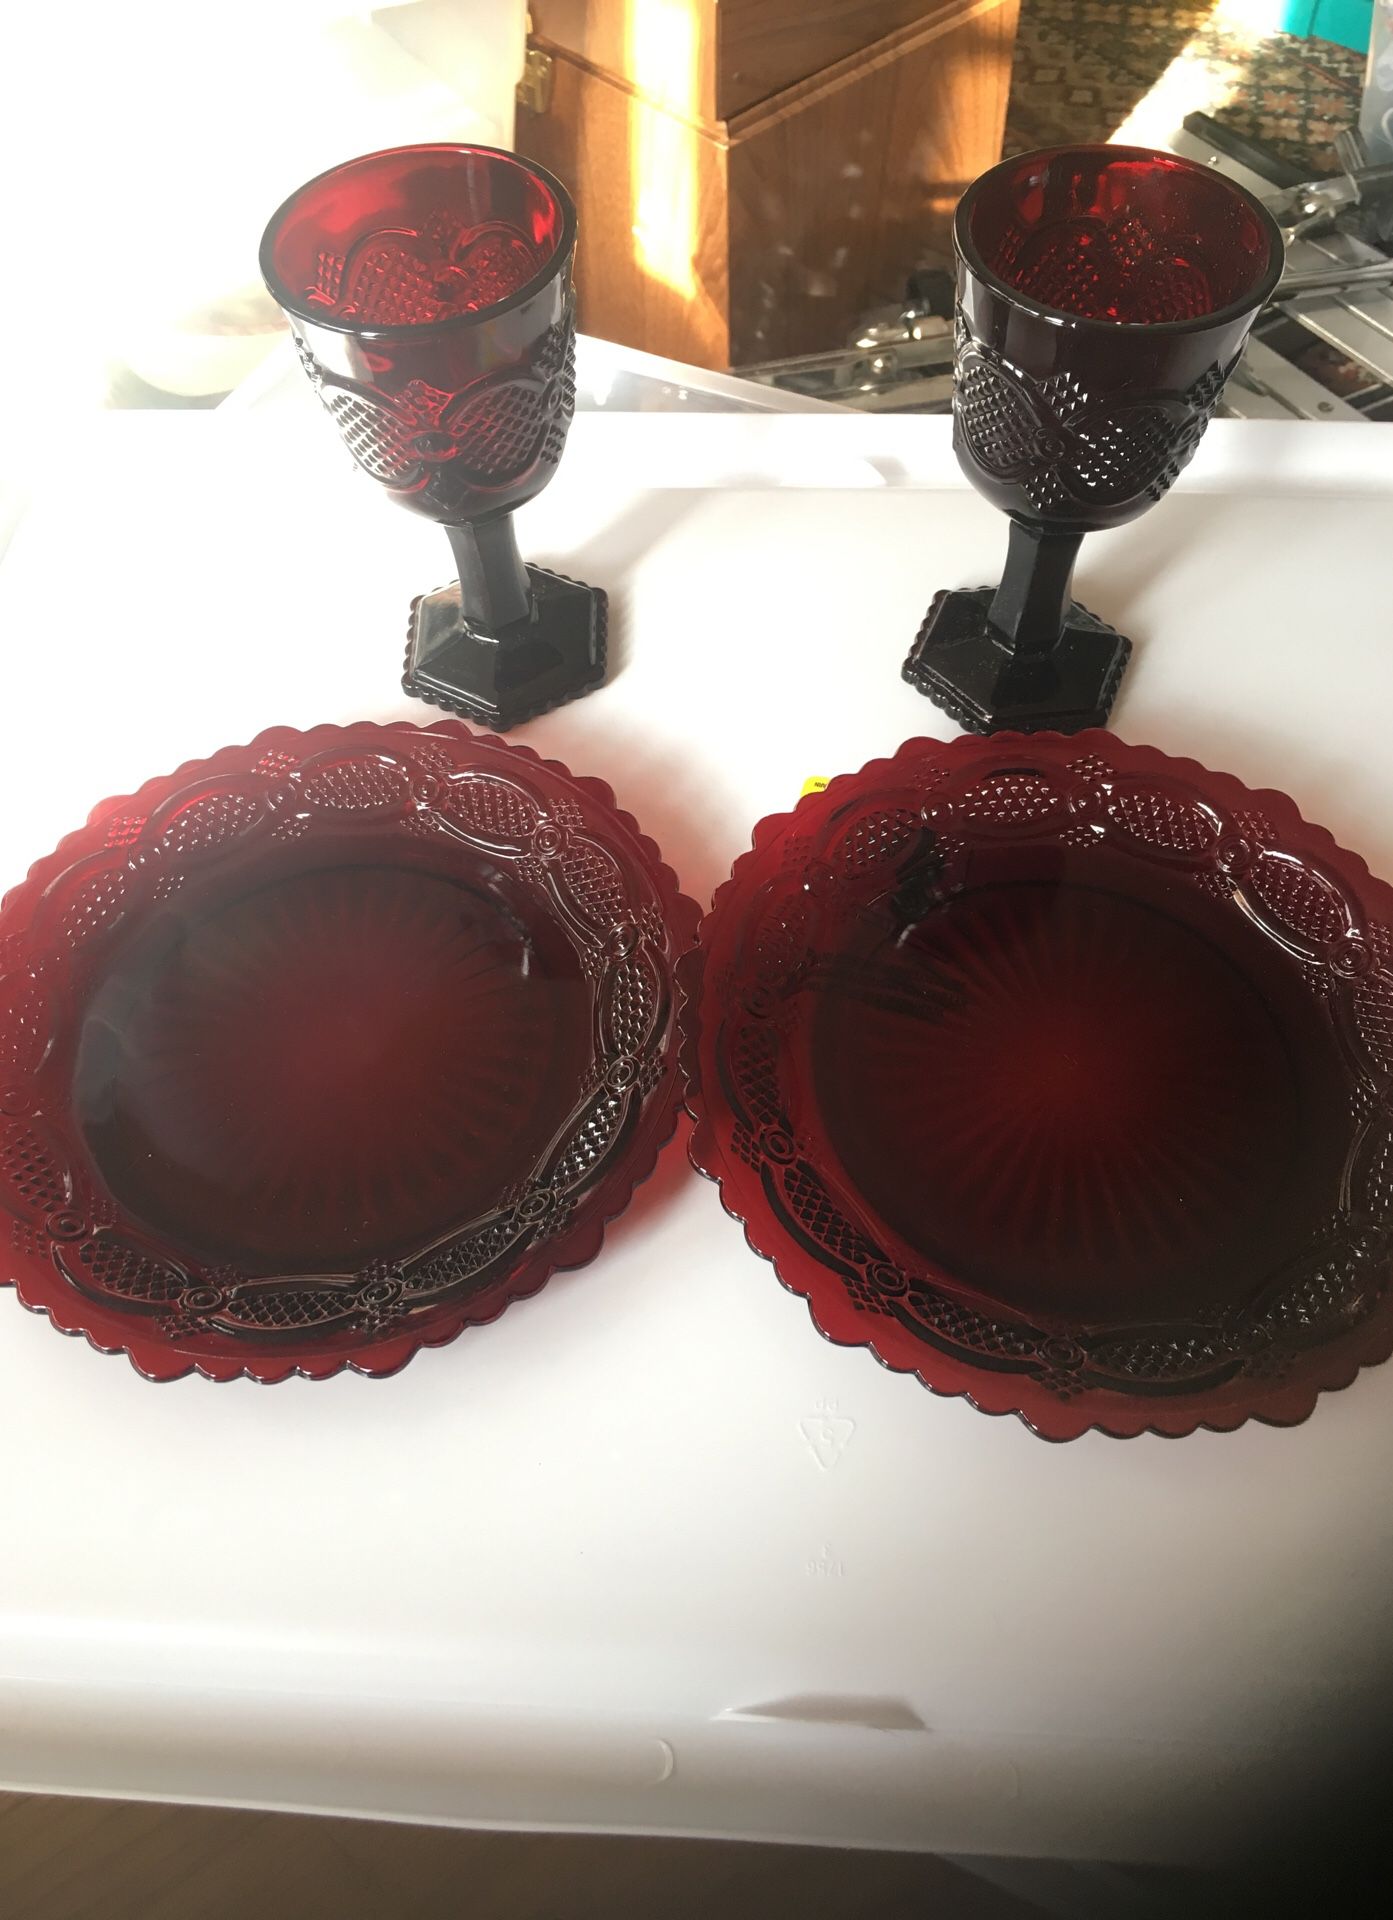 Avon 1876 cape cod collection Dessert plates and wine glass set